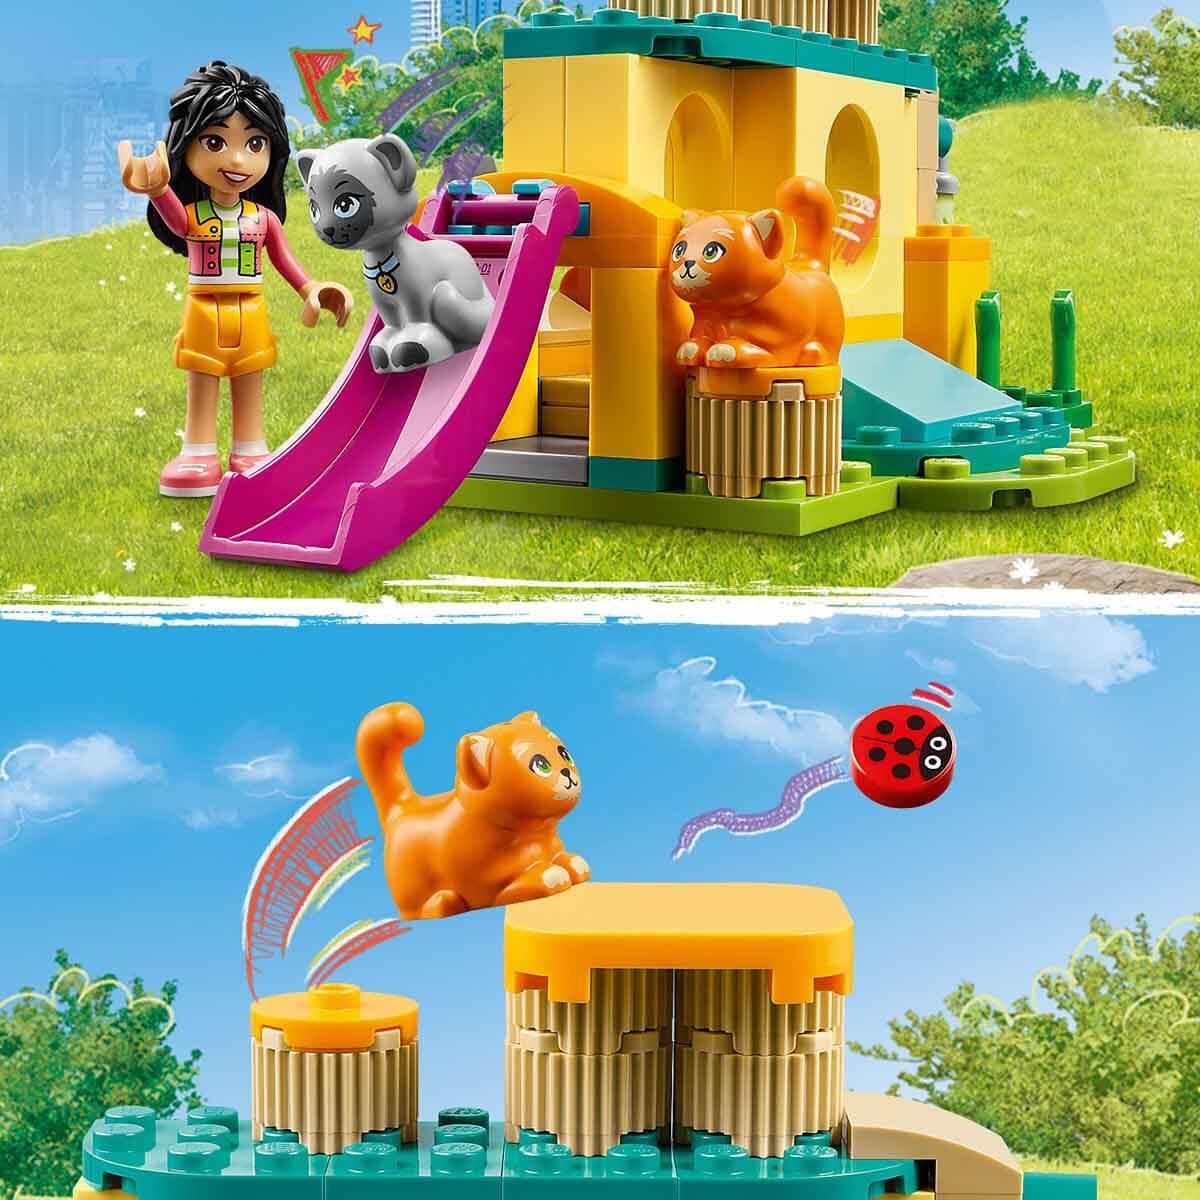 Lego Friends Kedi Oyun Parkı Macerası 42612 | Toysall